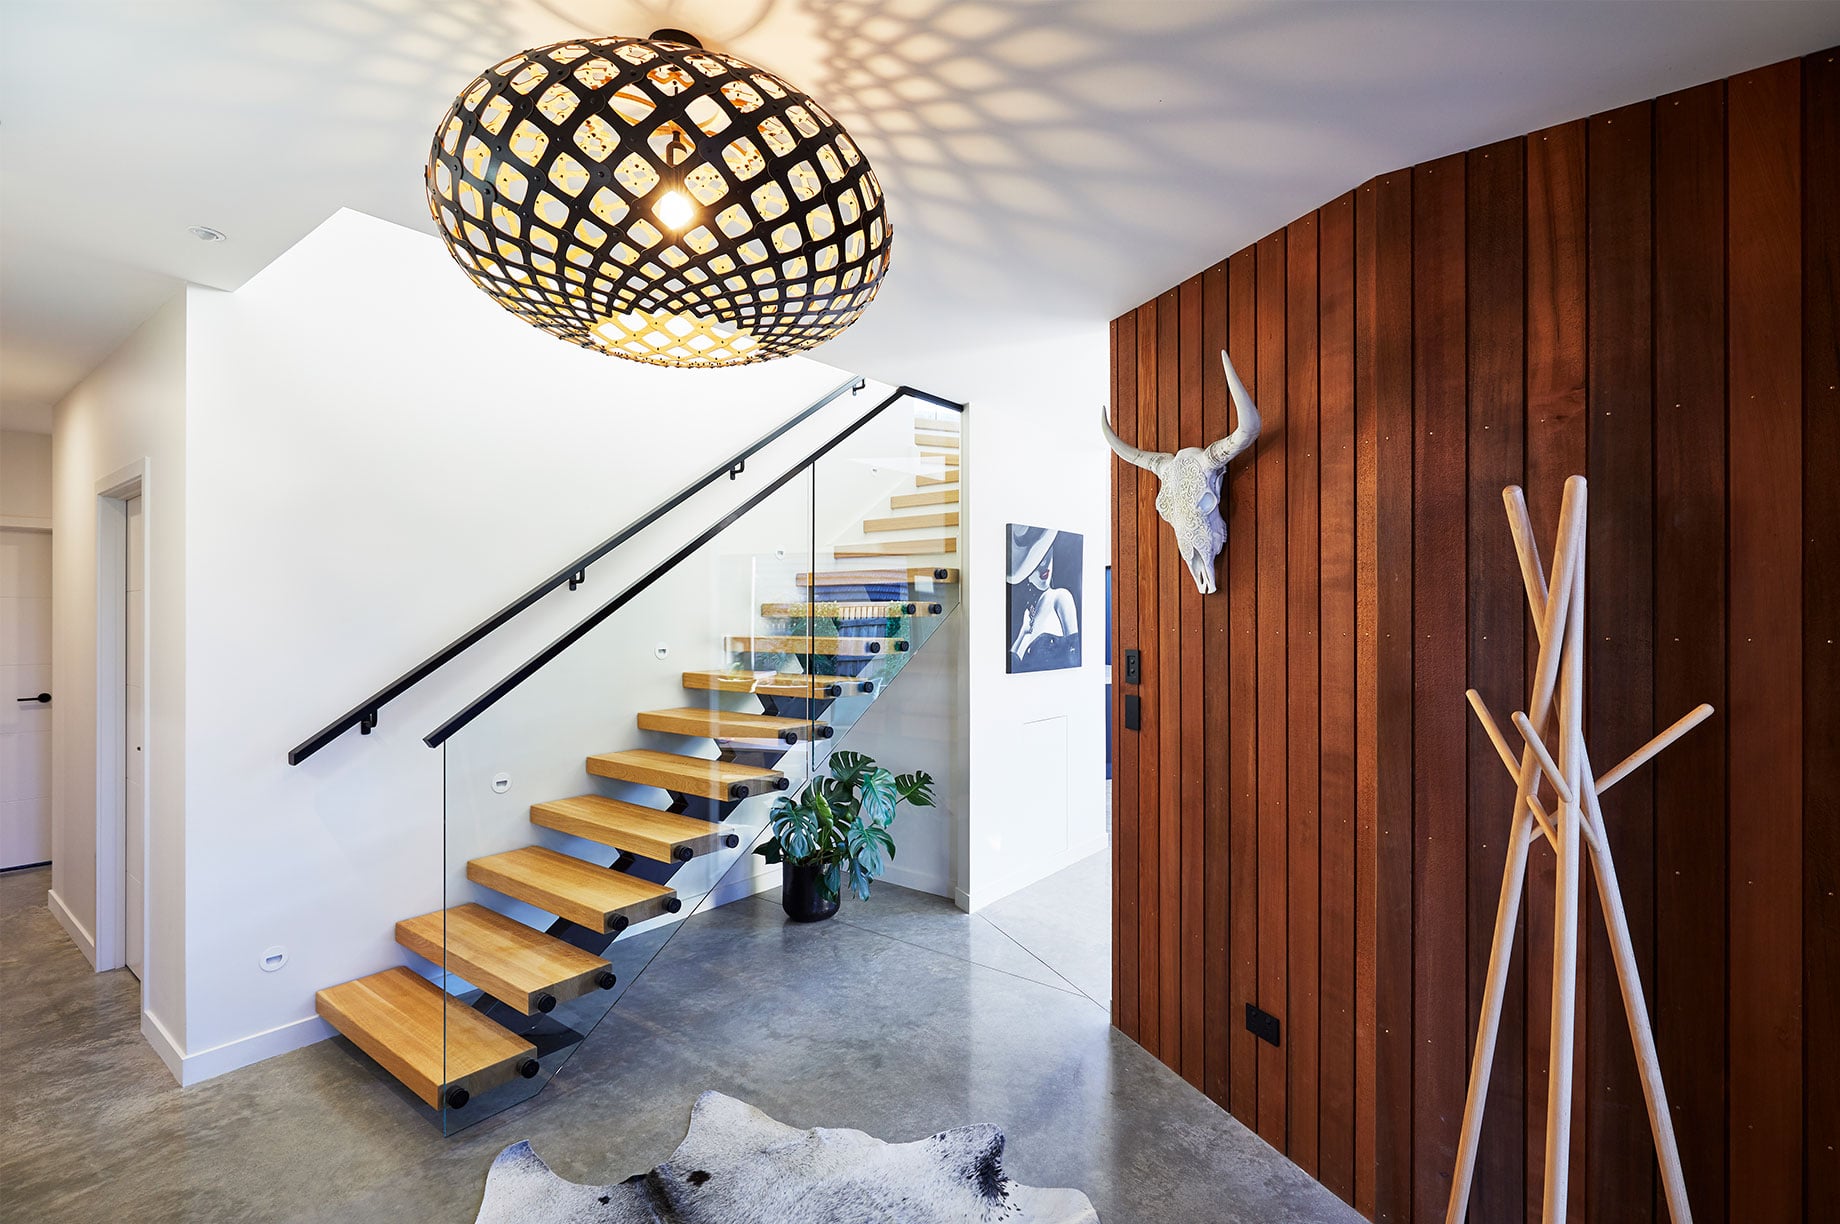 Internal wooden stairs